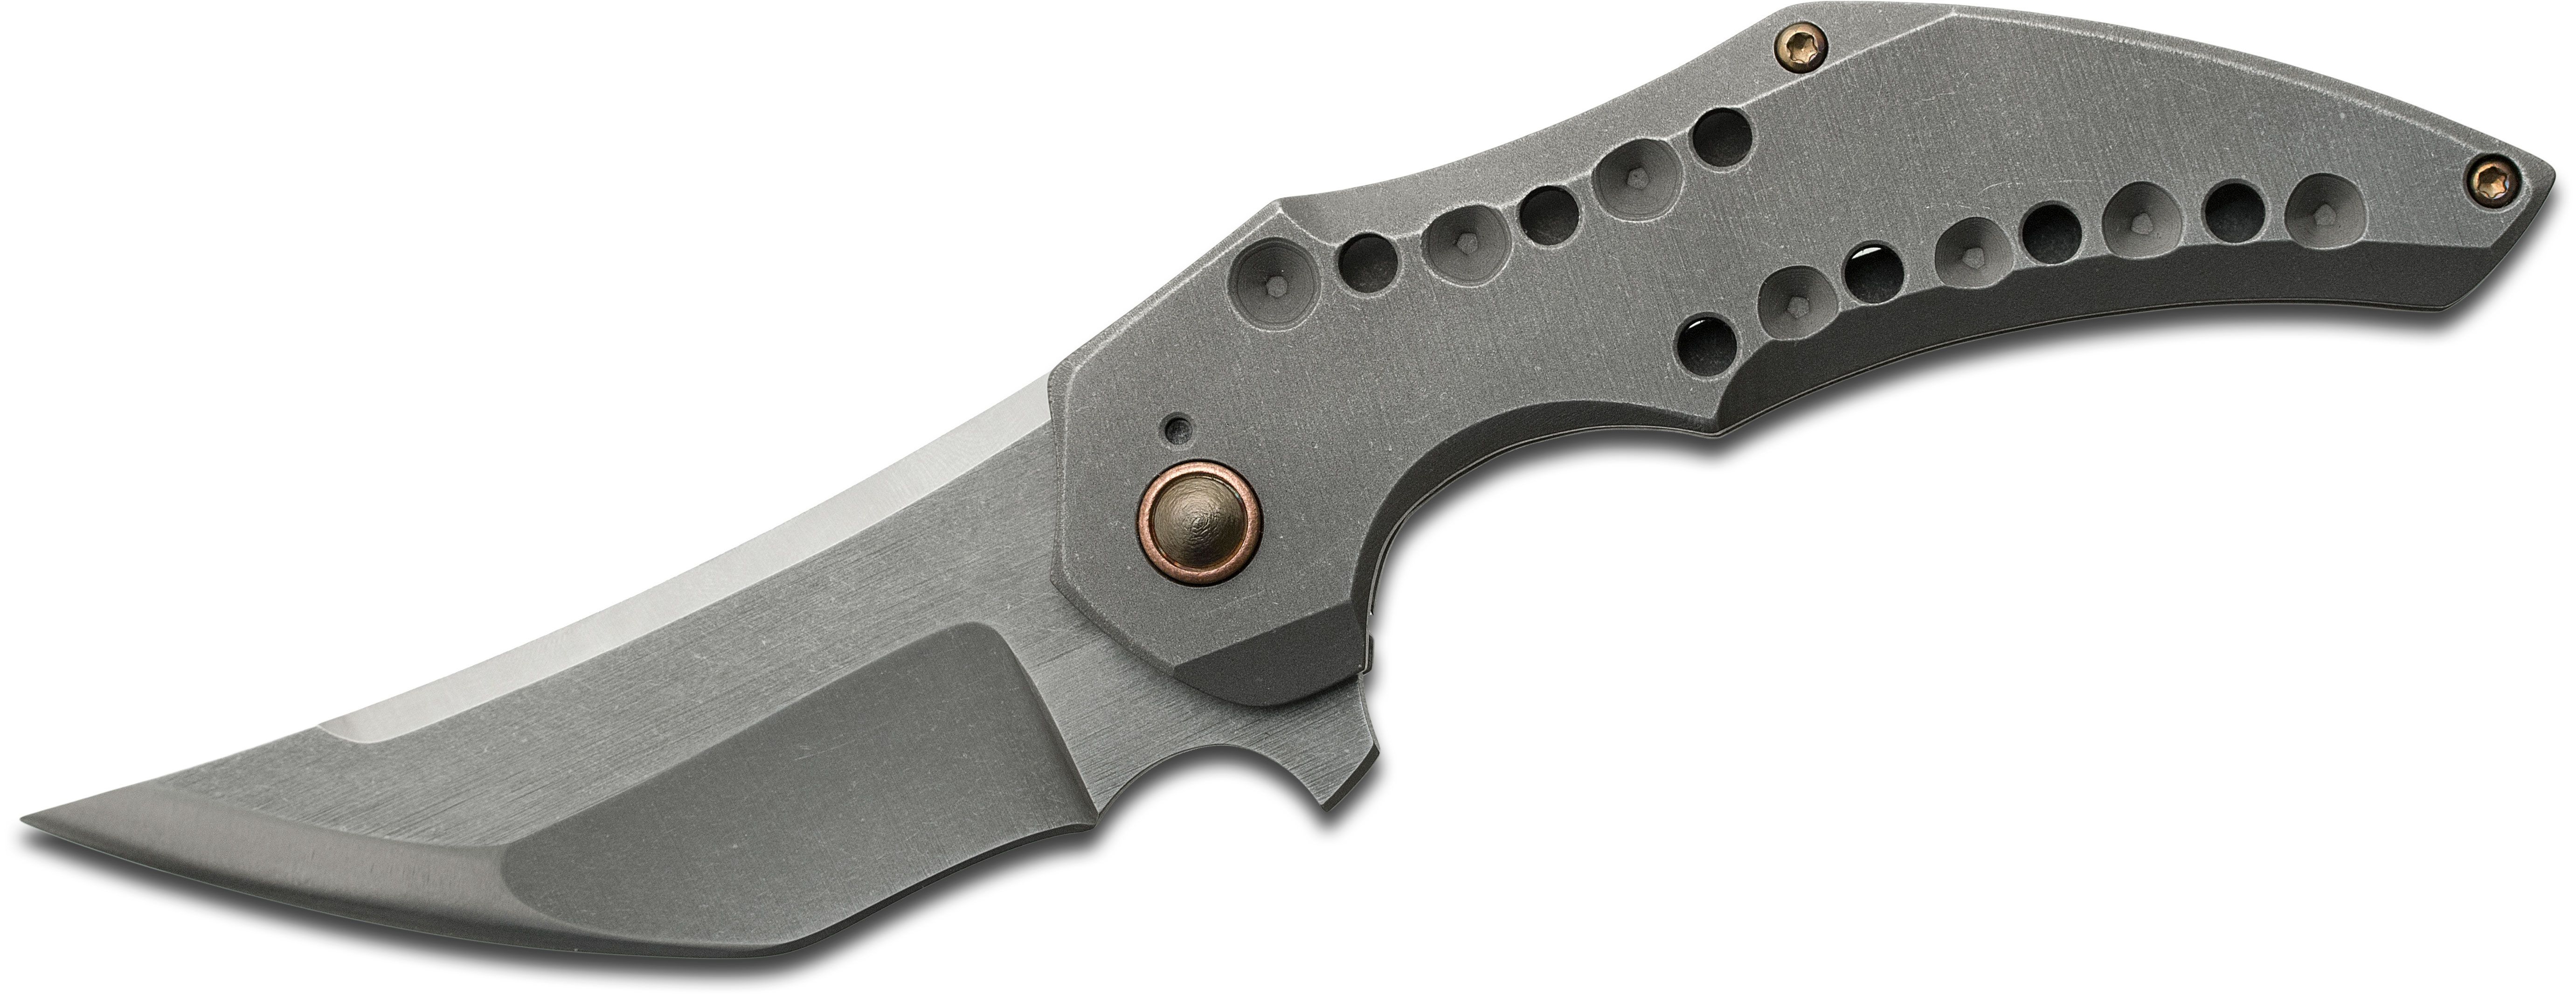 Blackstone 3 Folding Knife Stainless Steel